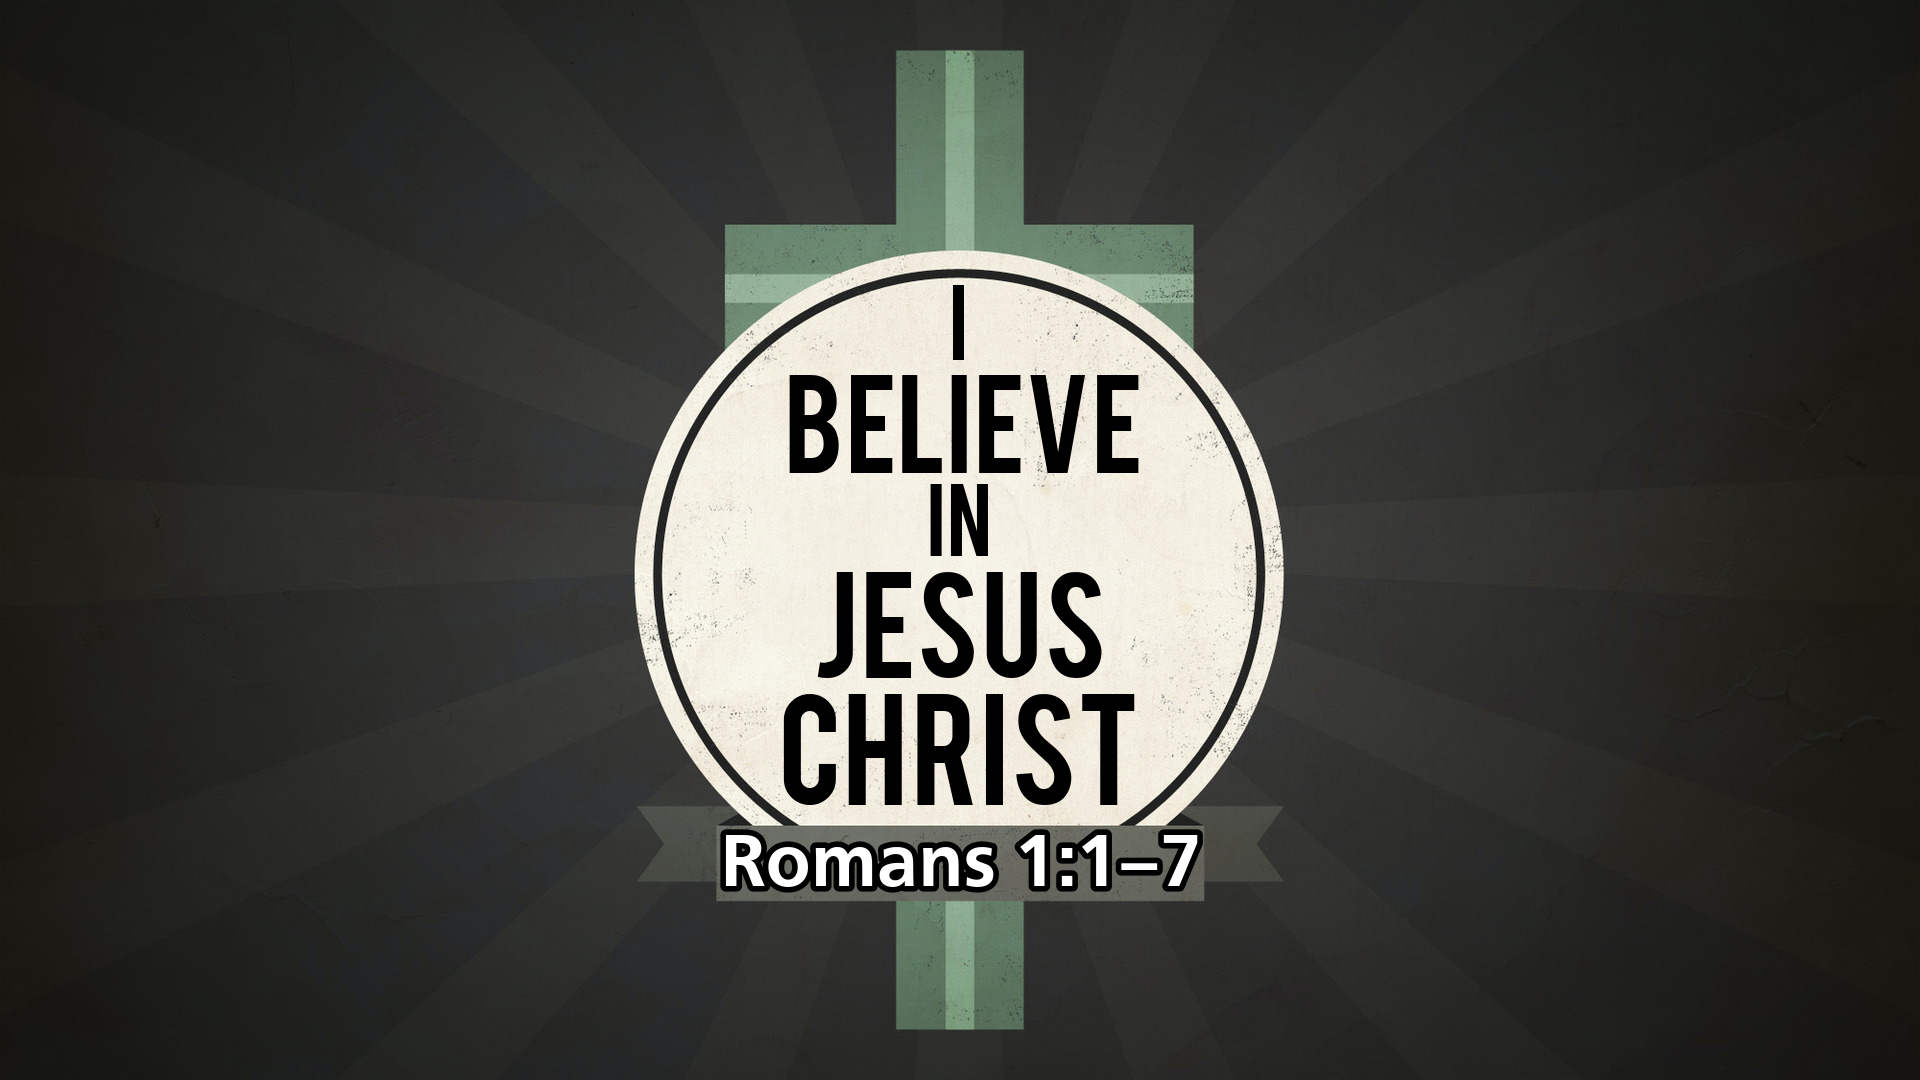 "I Believe In Jesus Christ"